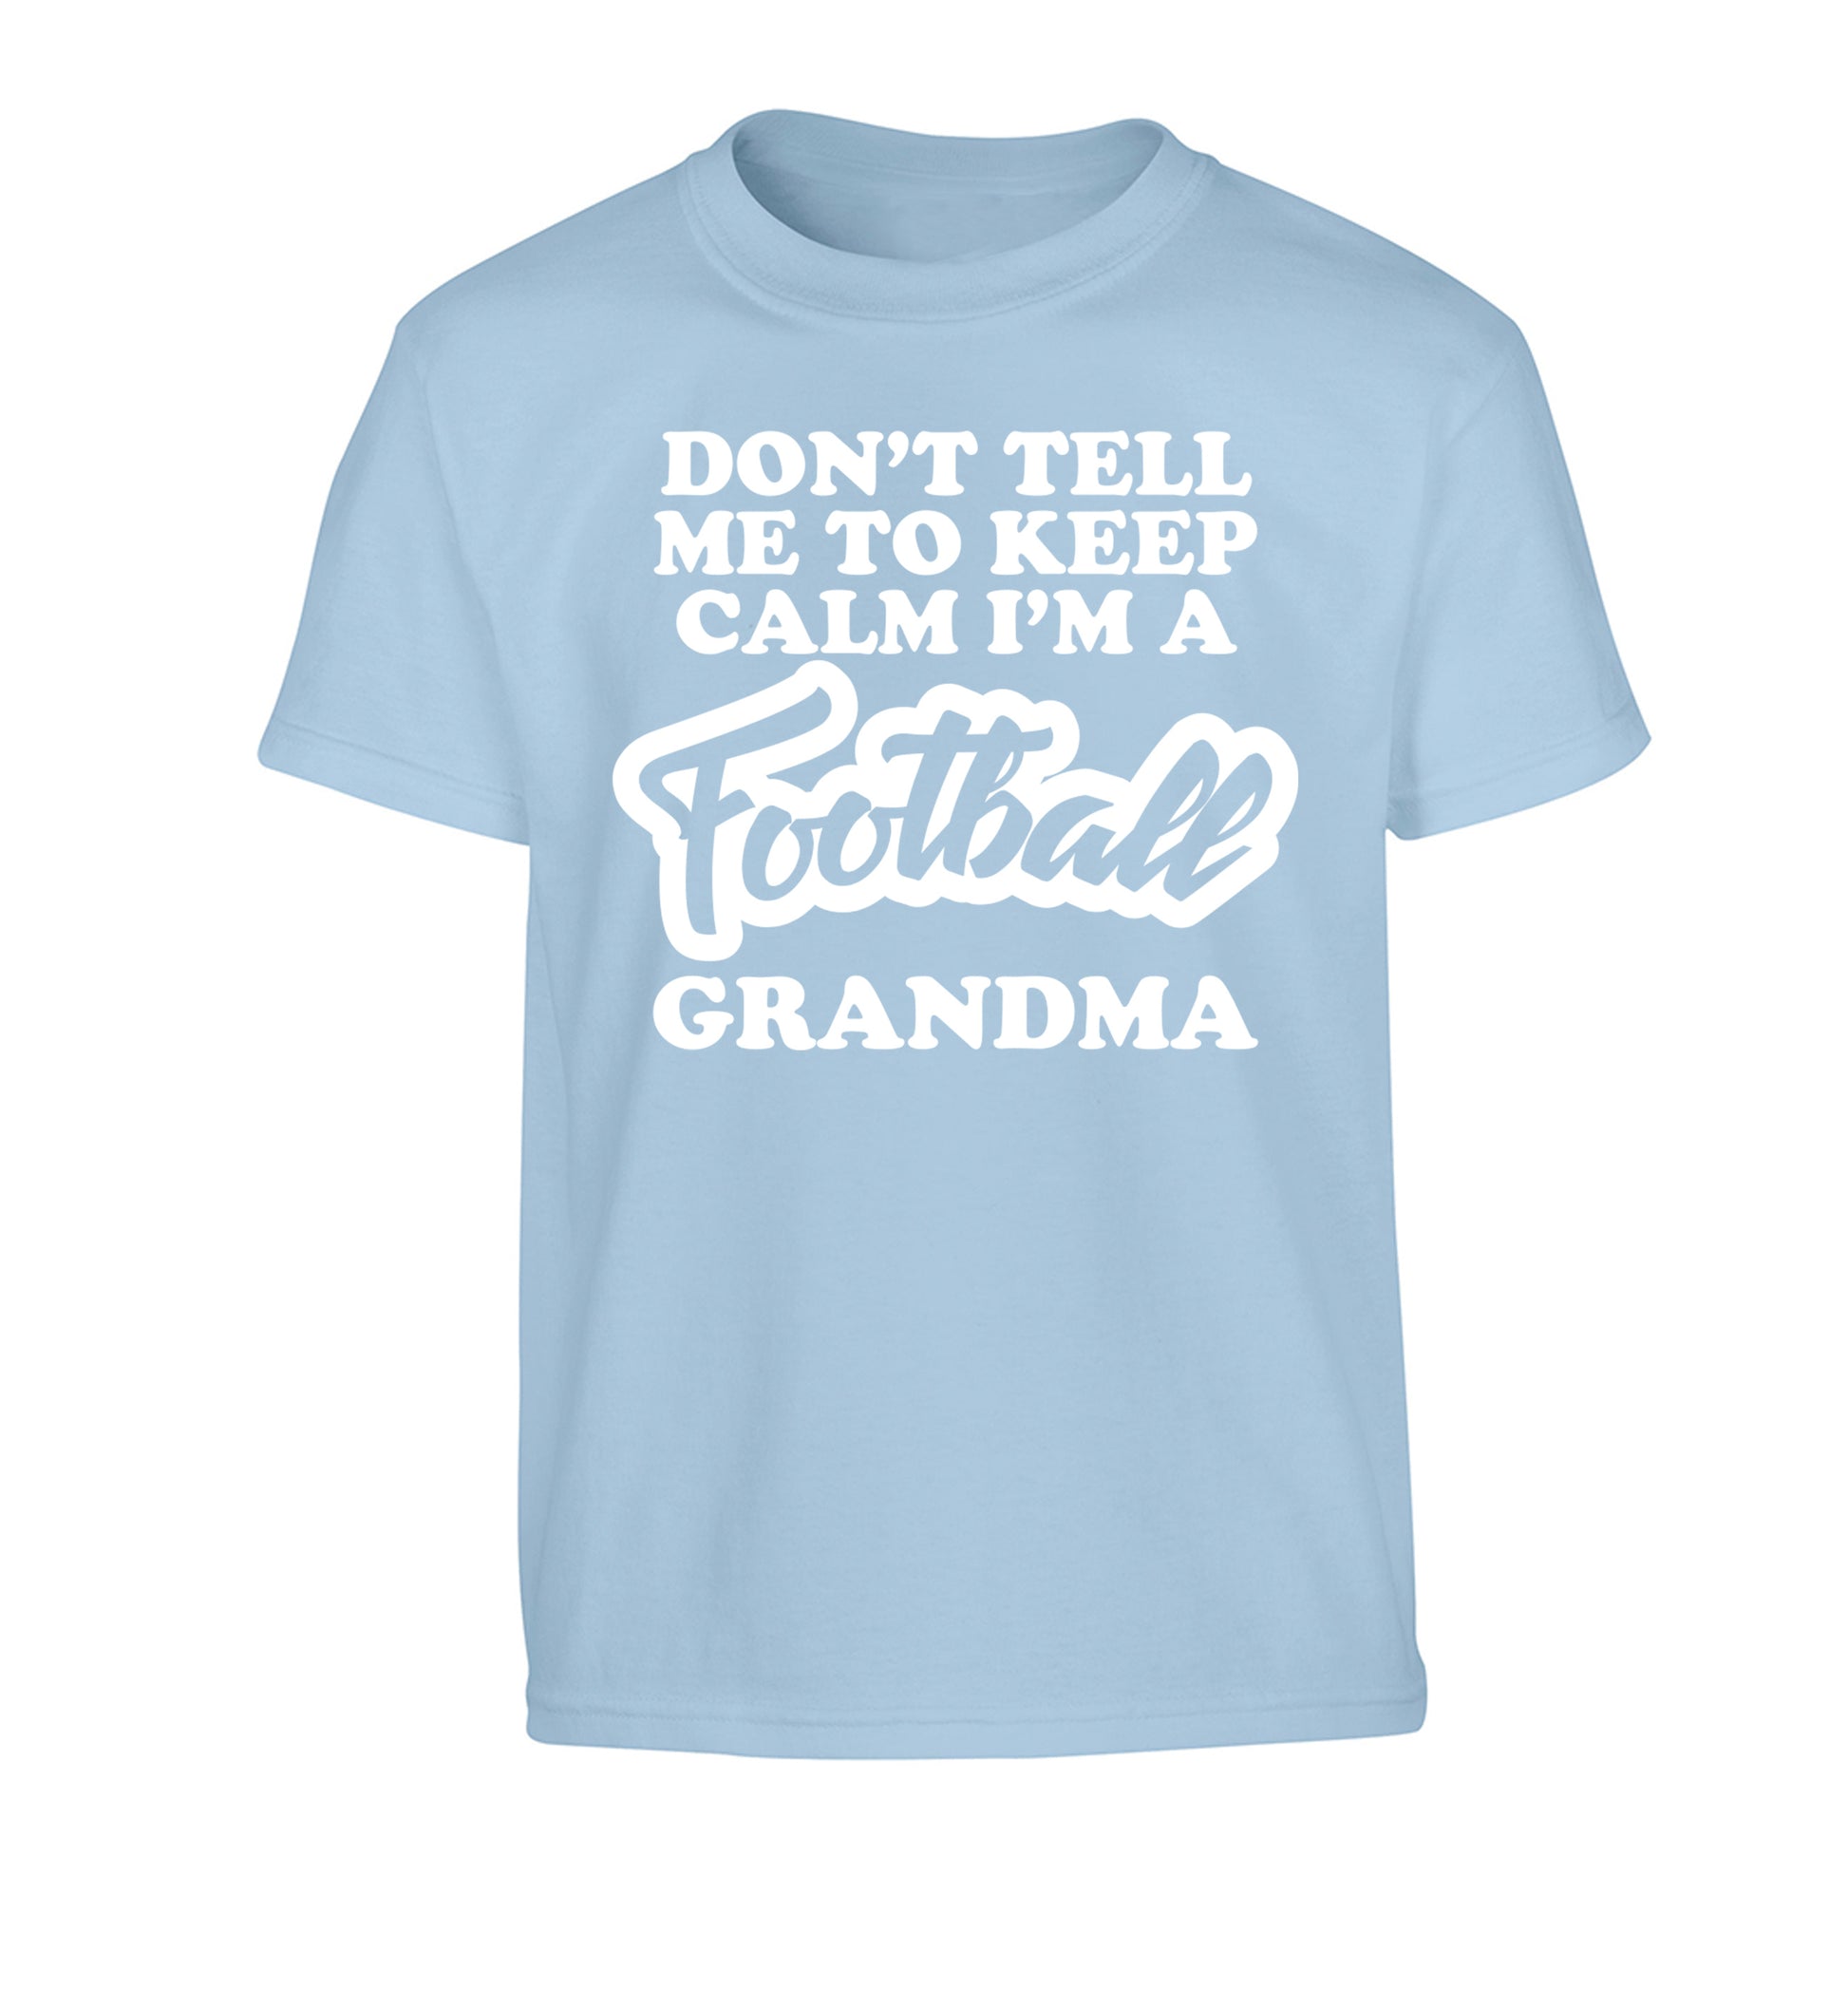 Don't tell me to keep calm I'm a football grandma Children's light blue Tshirt 12-14 Years